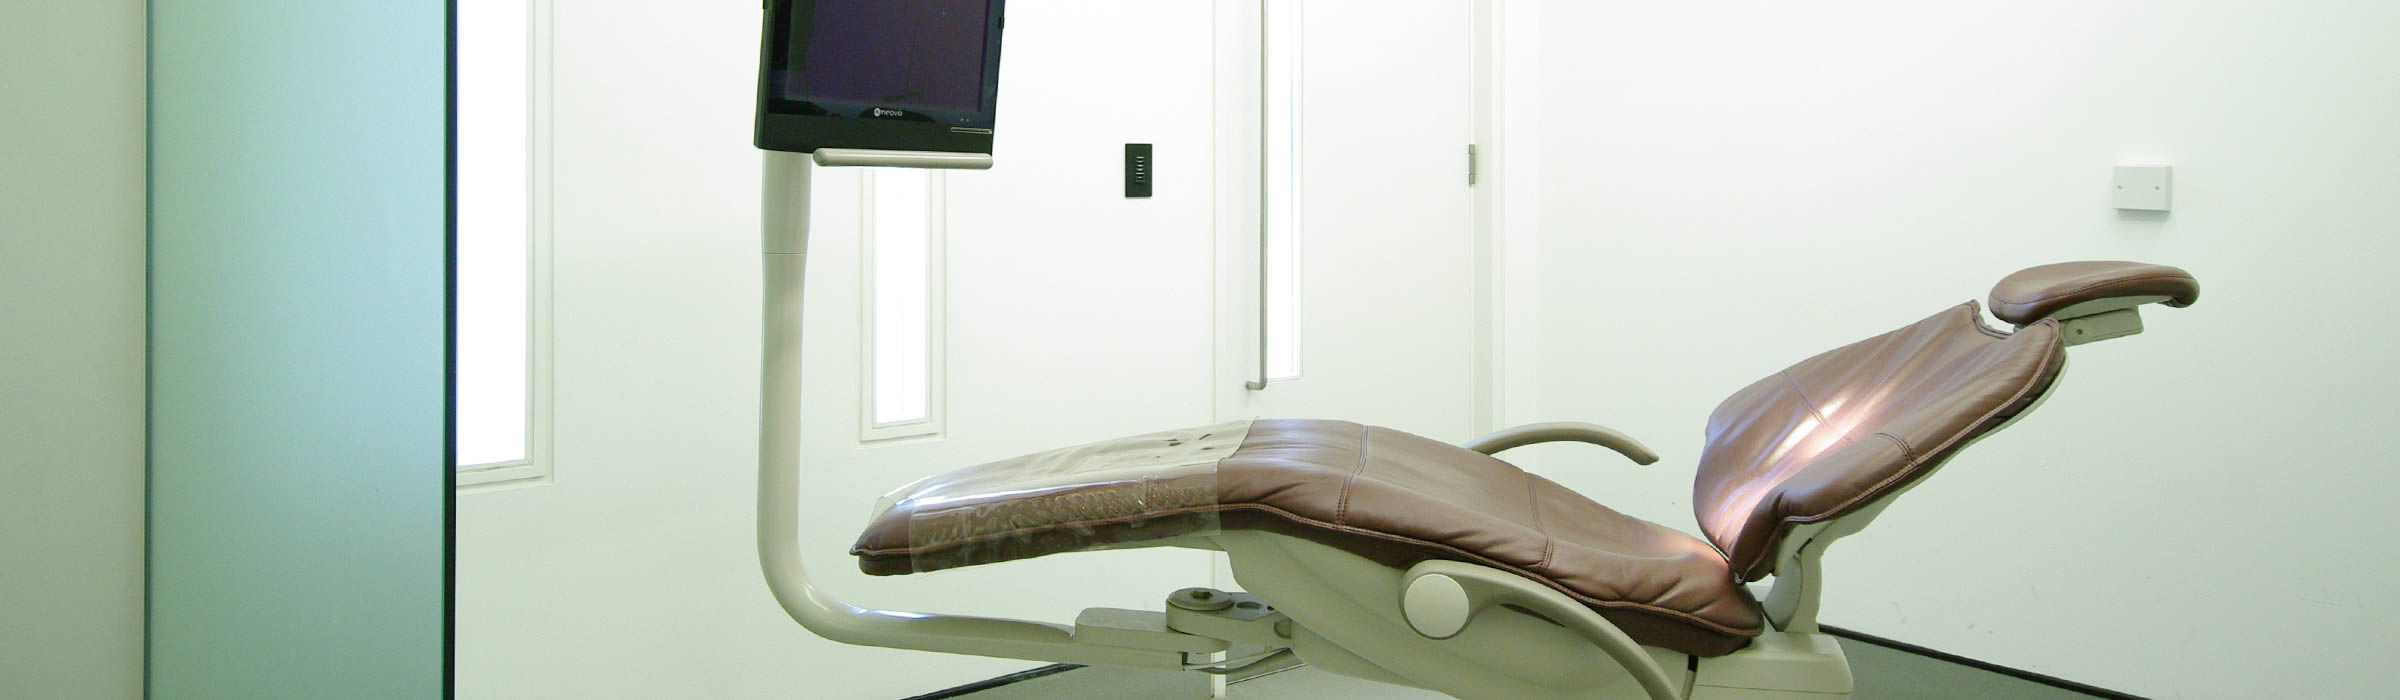 Senova Dentist Surgery Chair